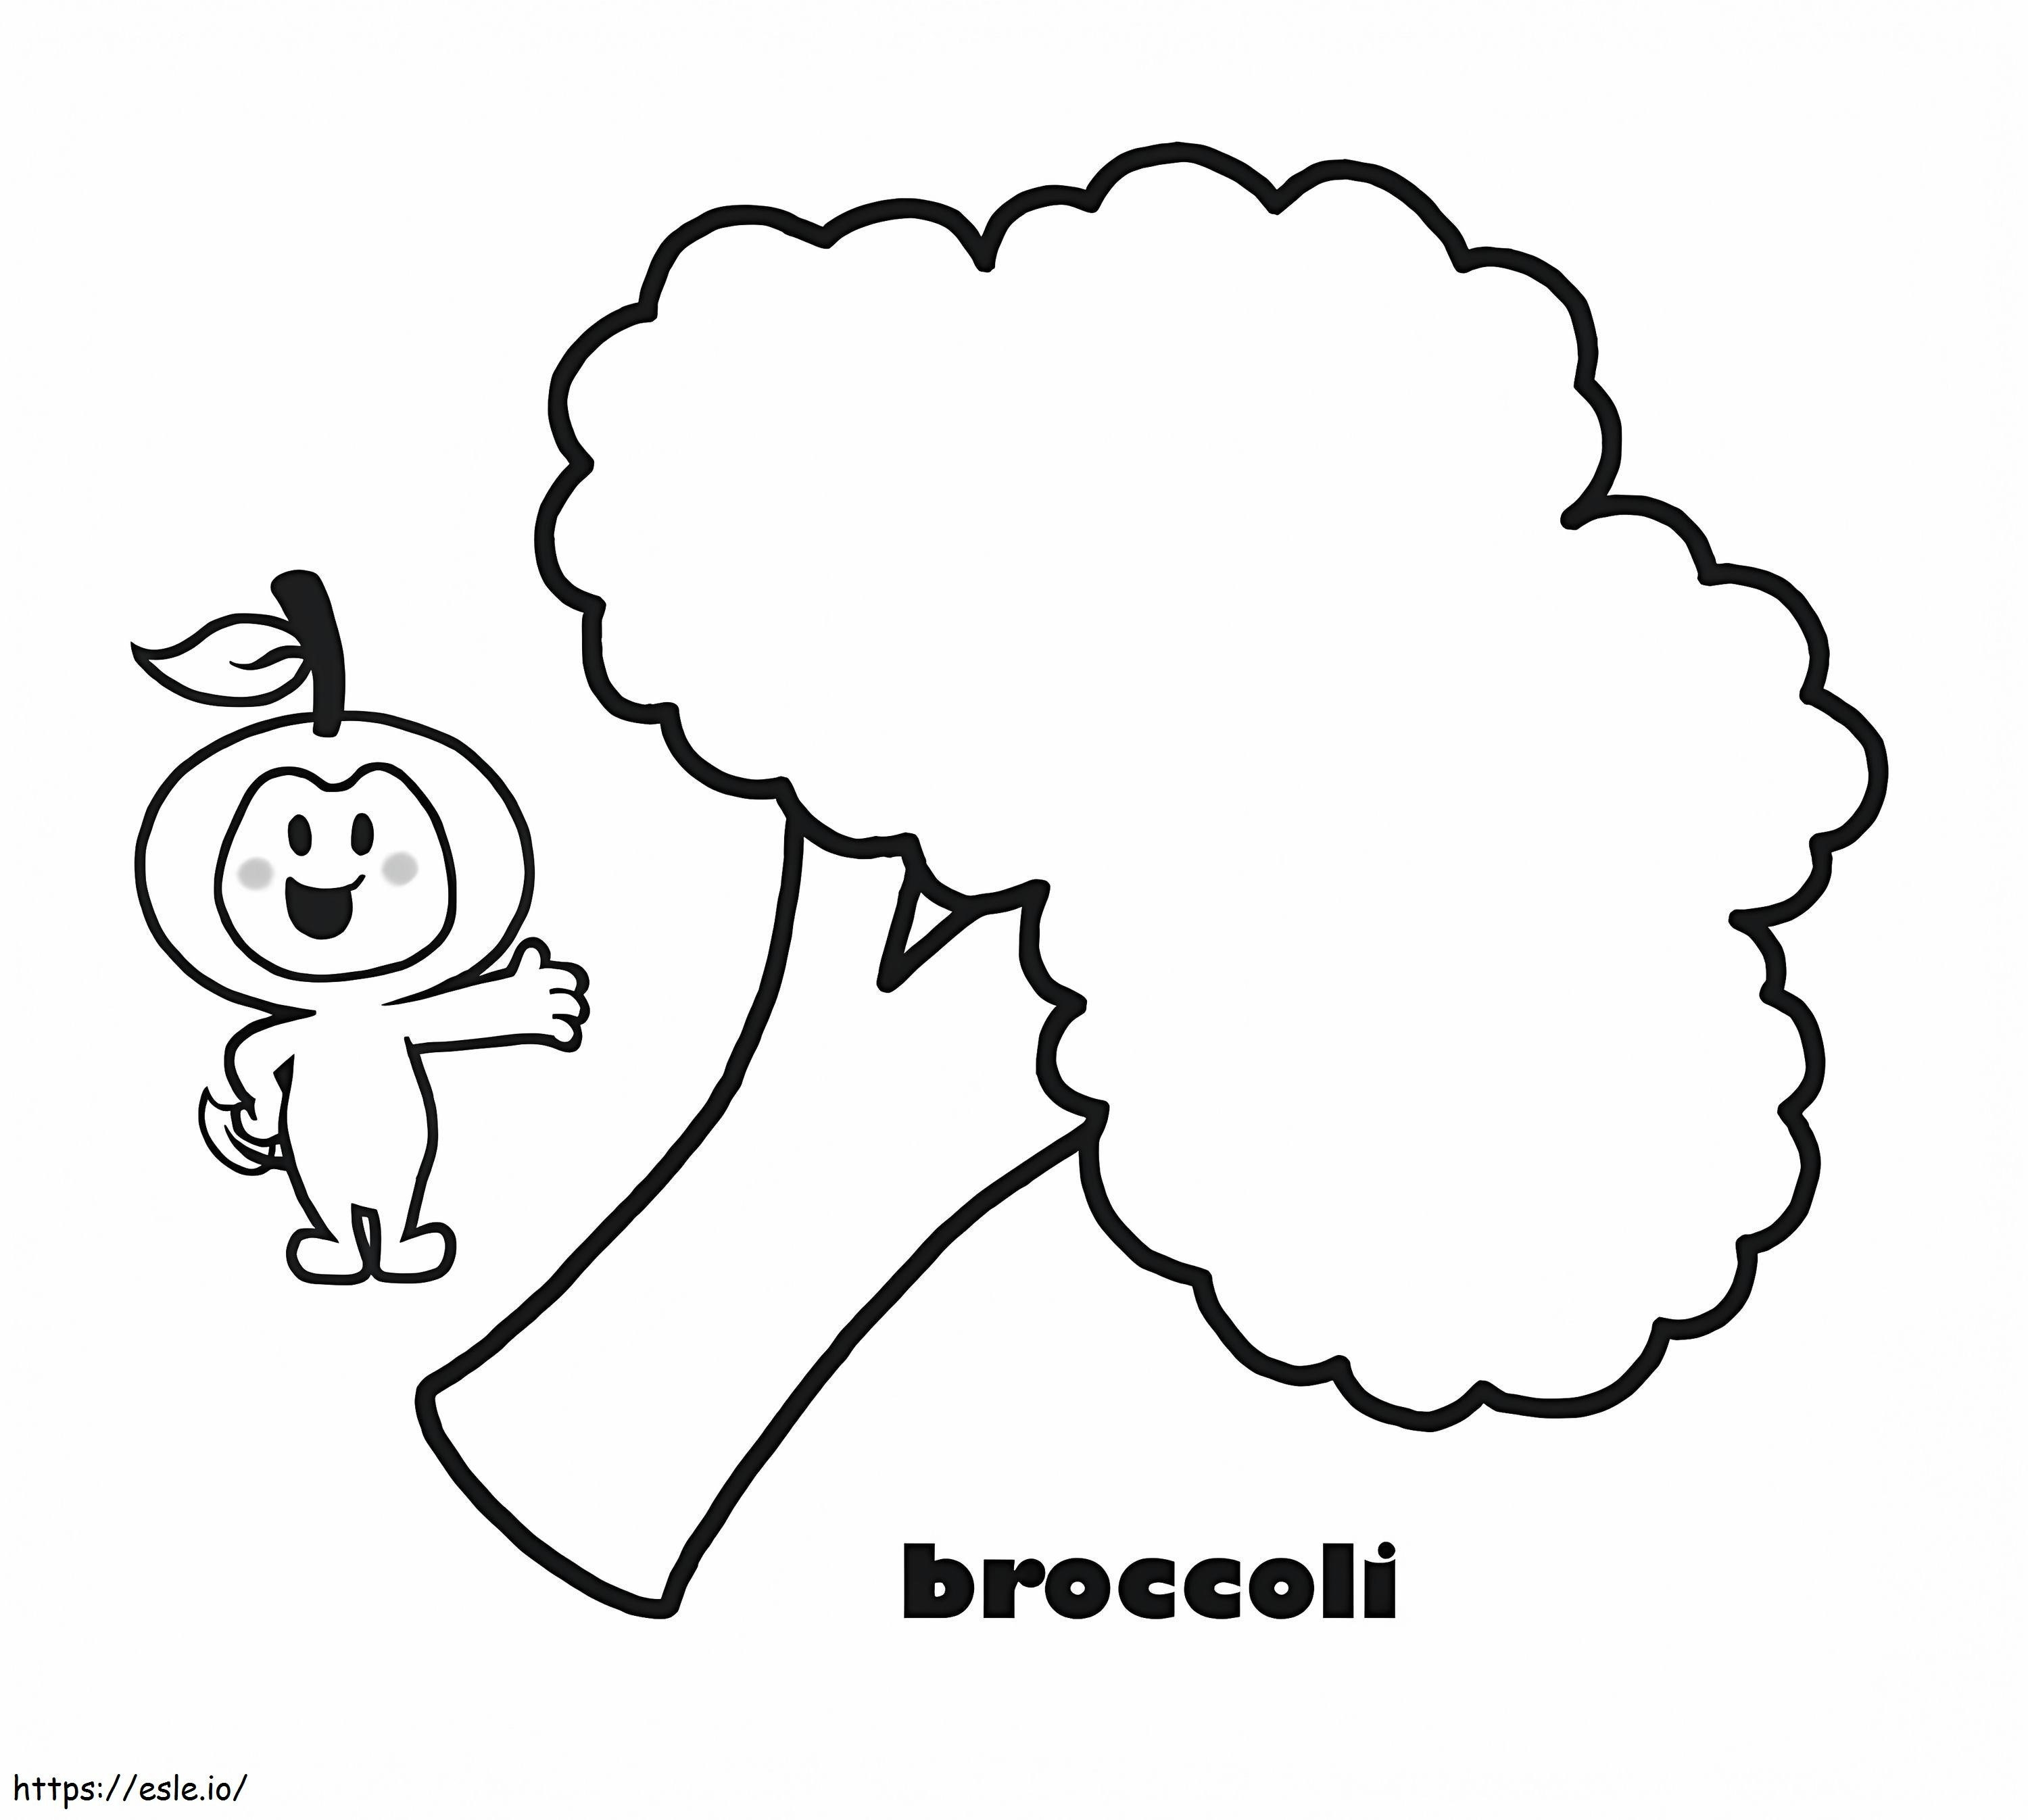 Simple Broccoli coloring page